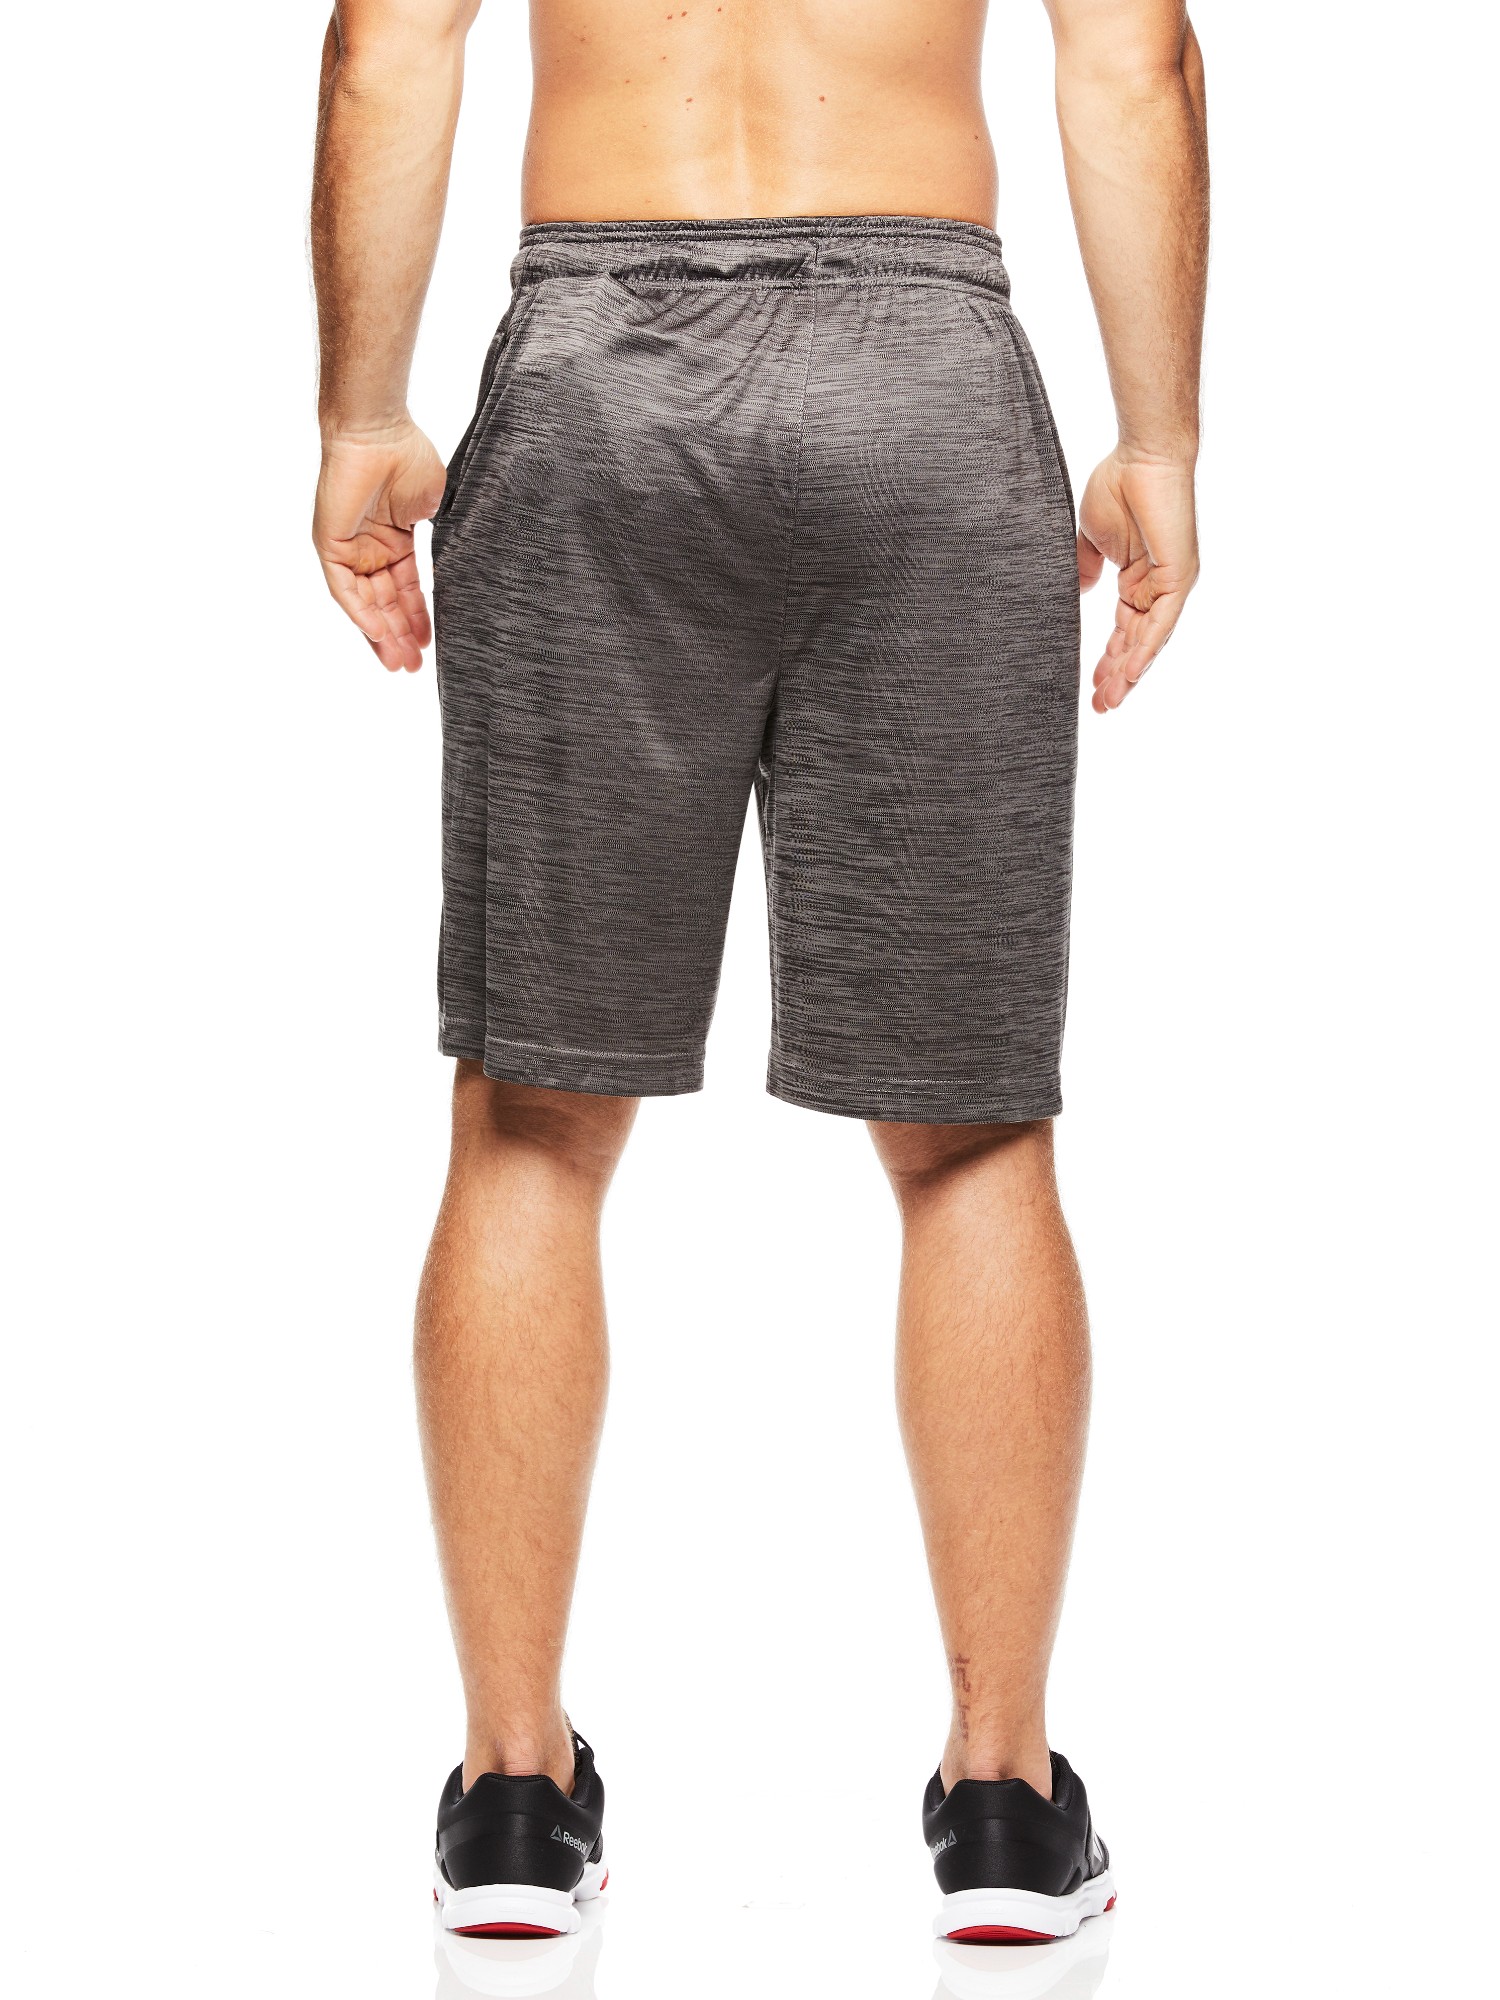 Reebok Men's 9" Cruz Athletic Shorts - image 4 of 4